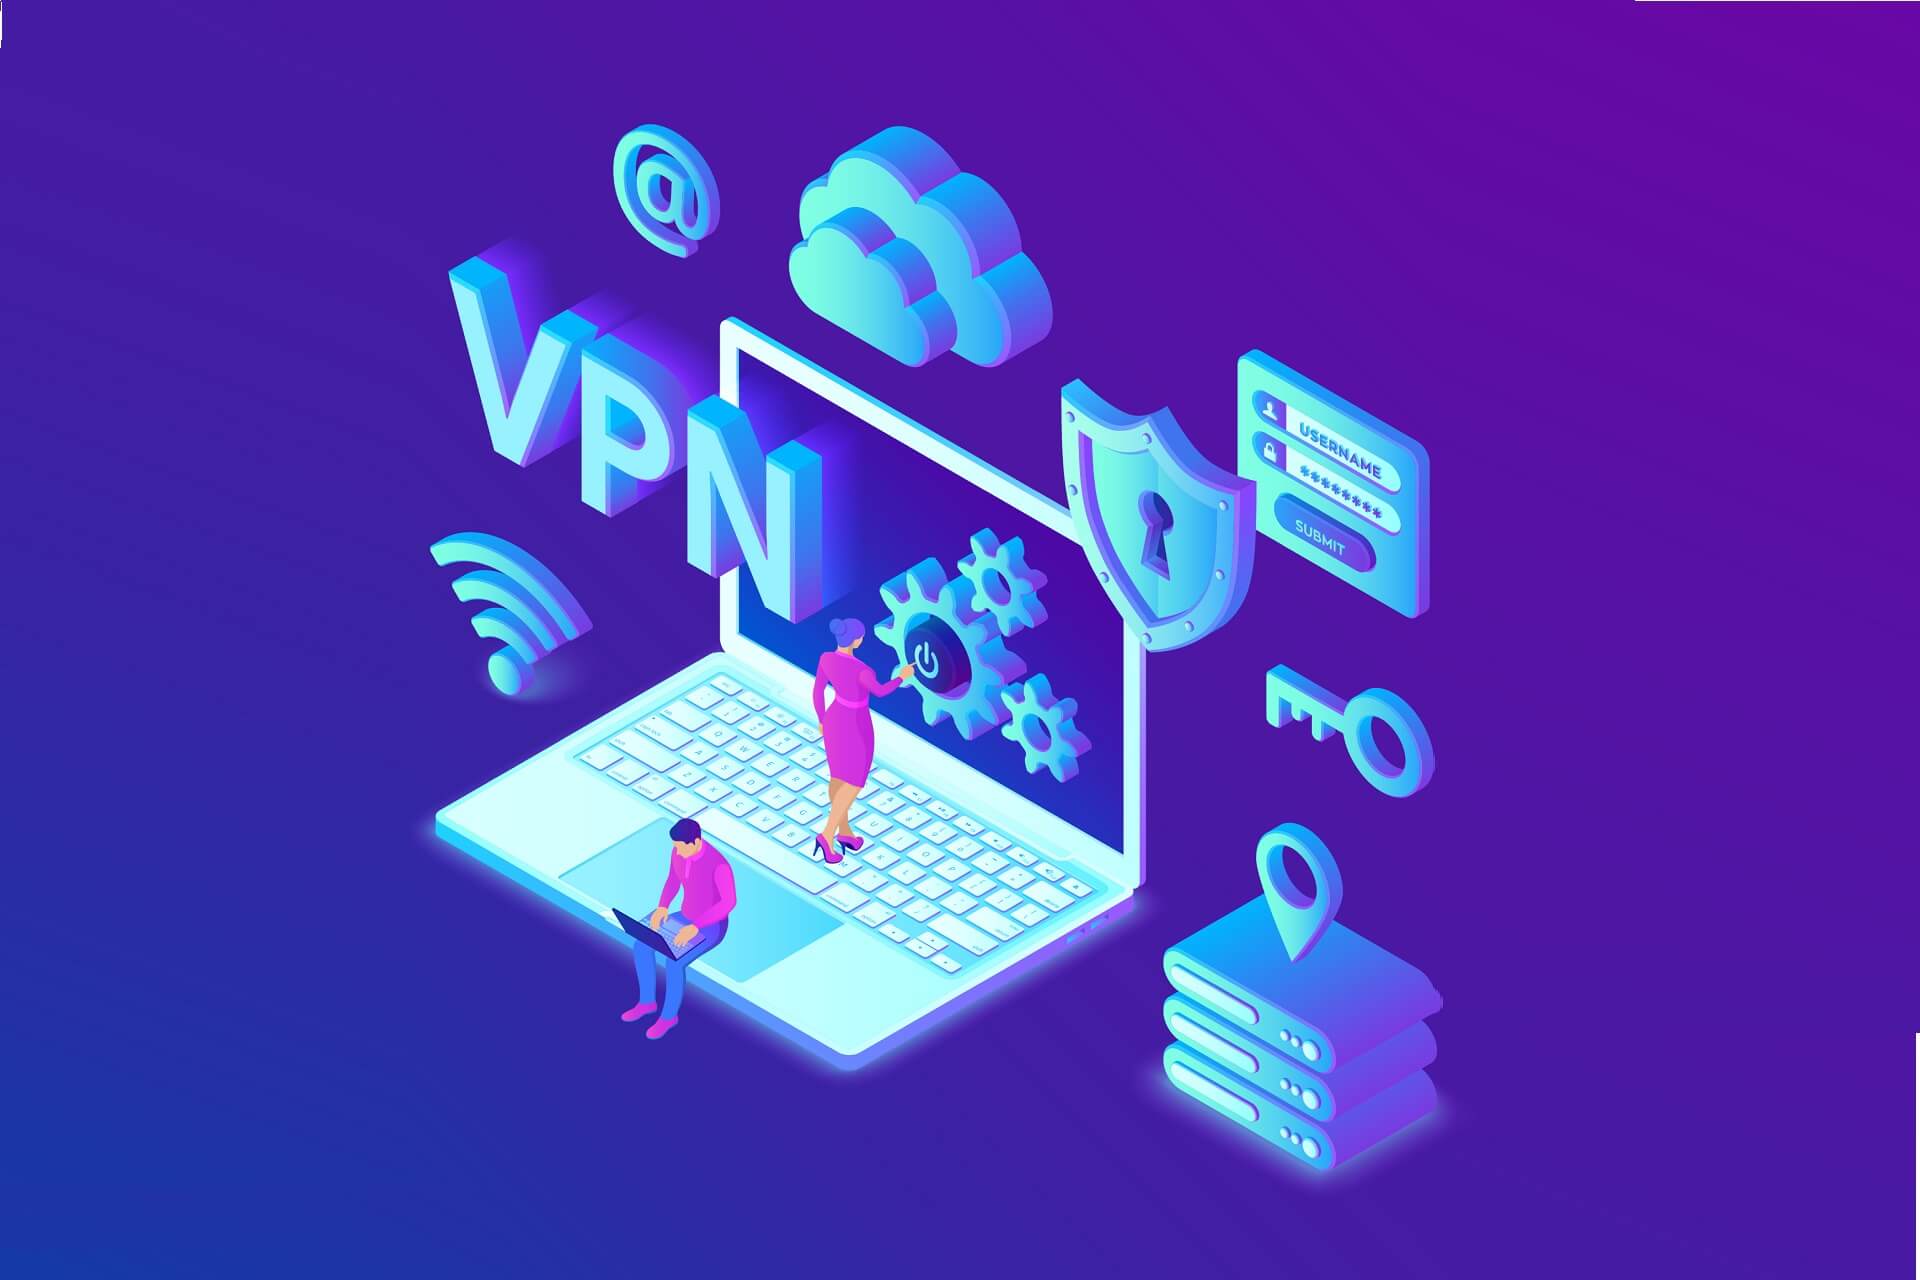 VPN blocked by security settings